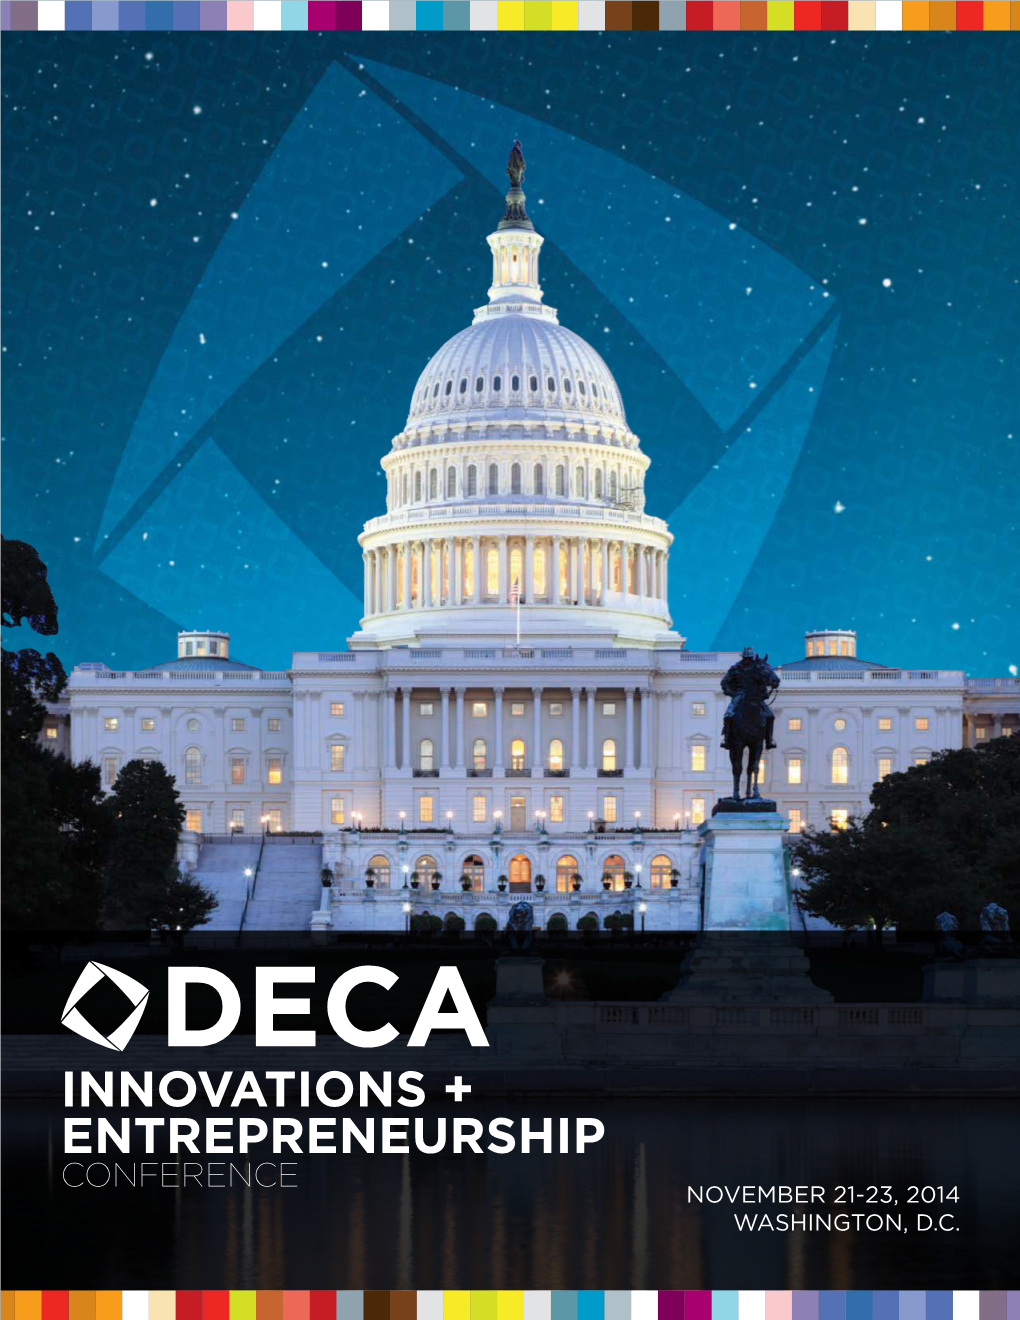 Innovations + Entrepreneurship Conference November 21-23, 2014 Washington, D.C